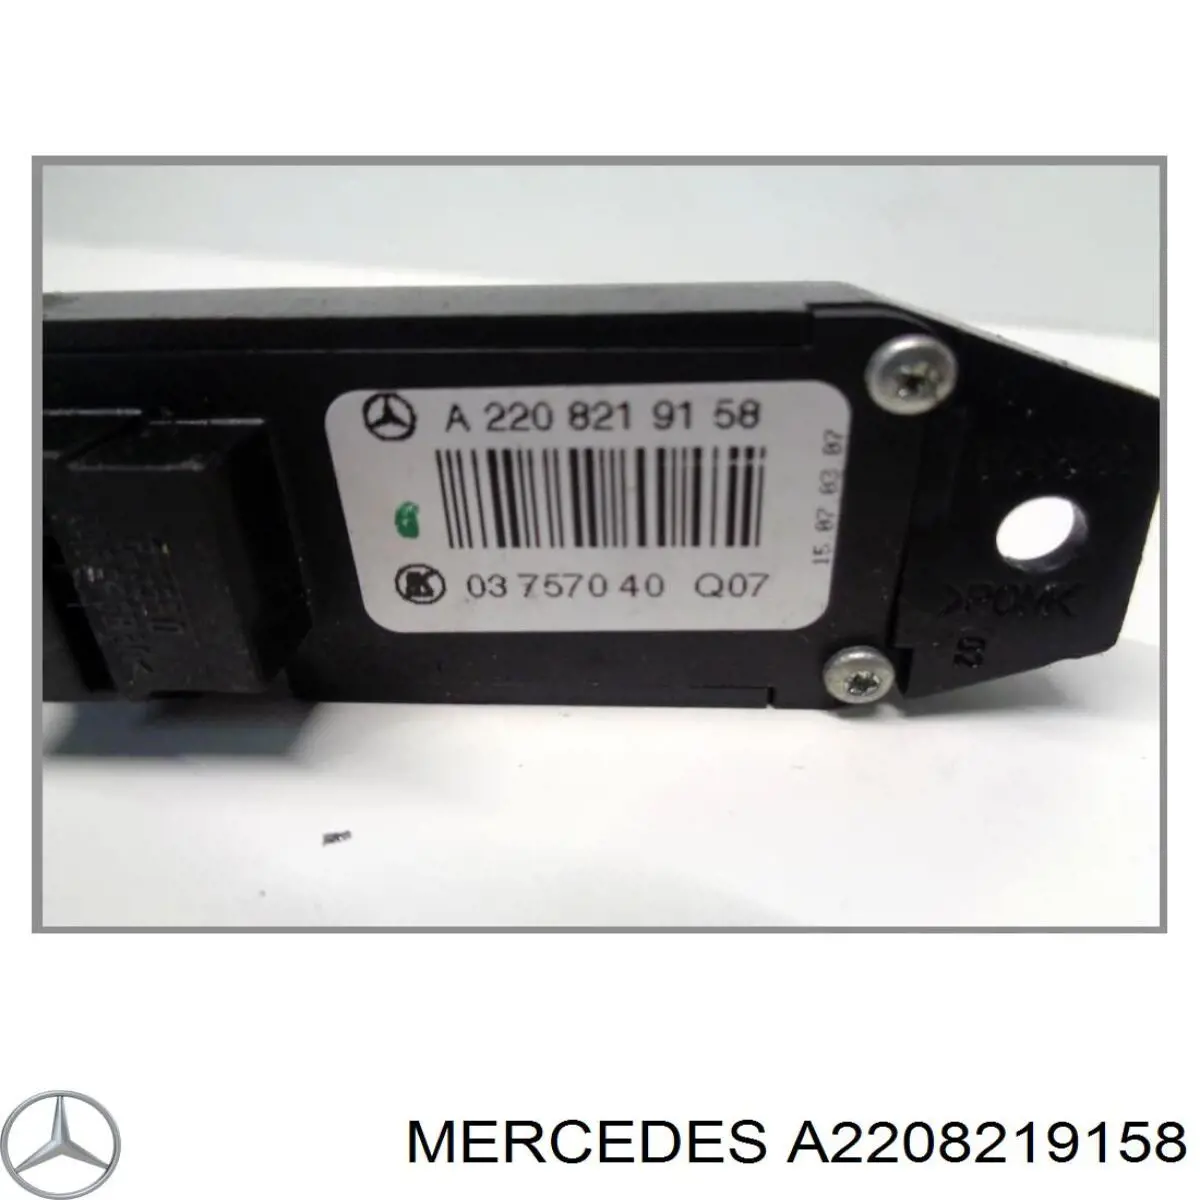 A2208219158 Mercedes